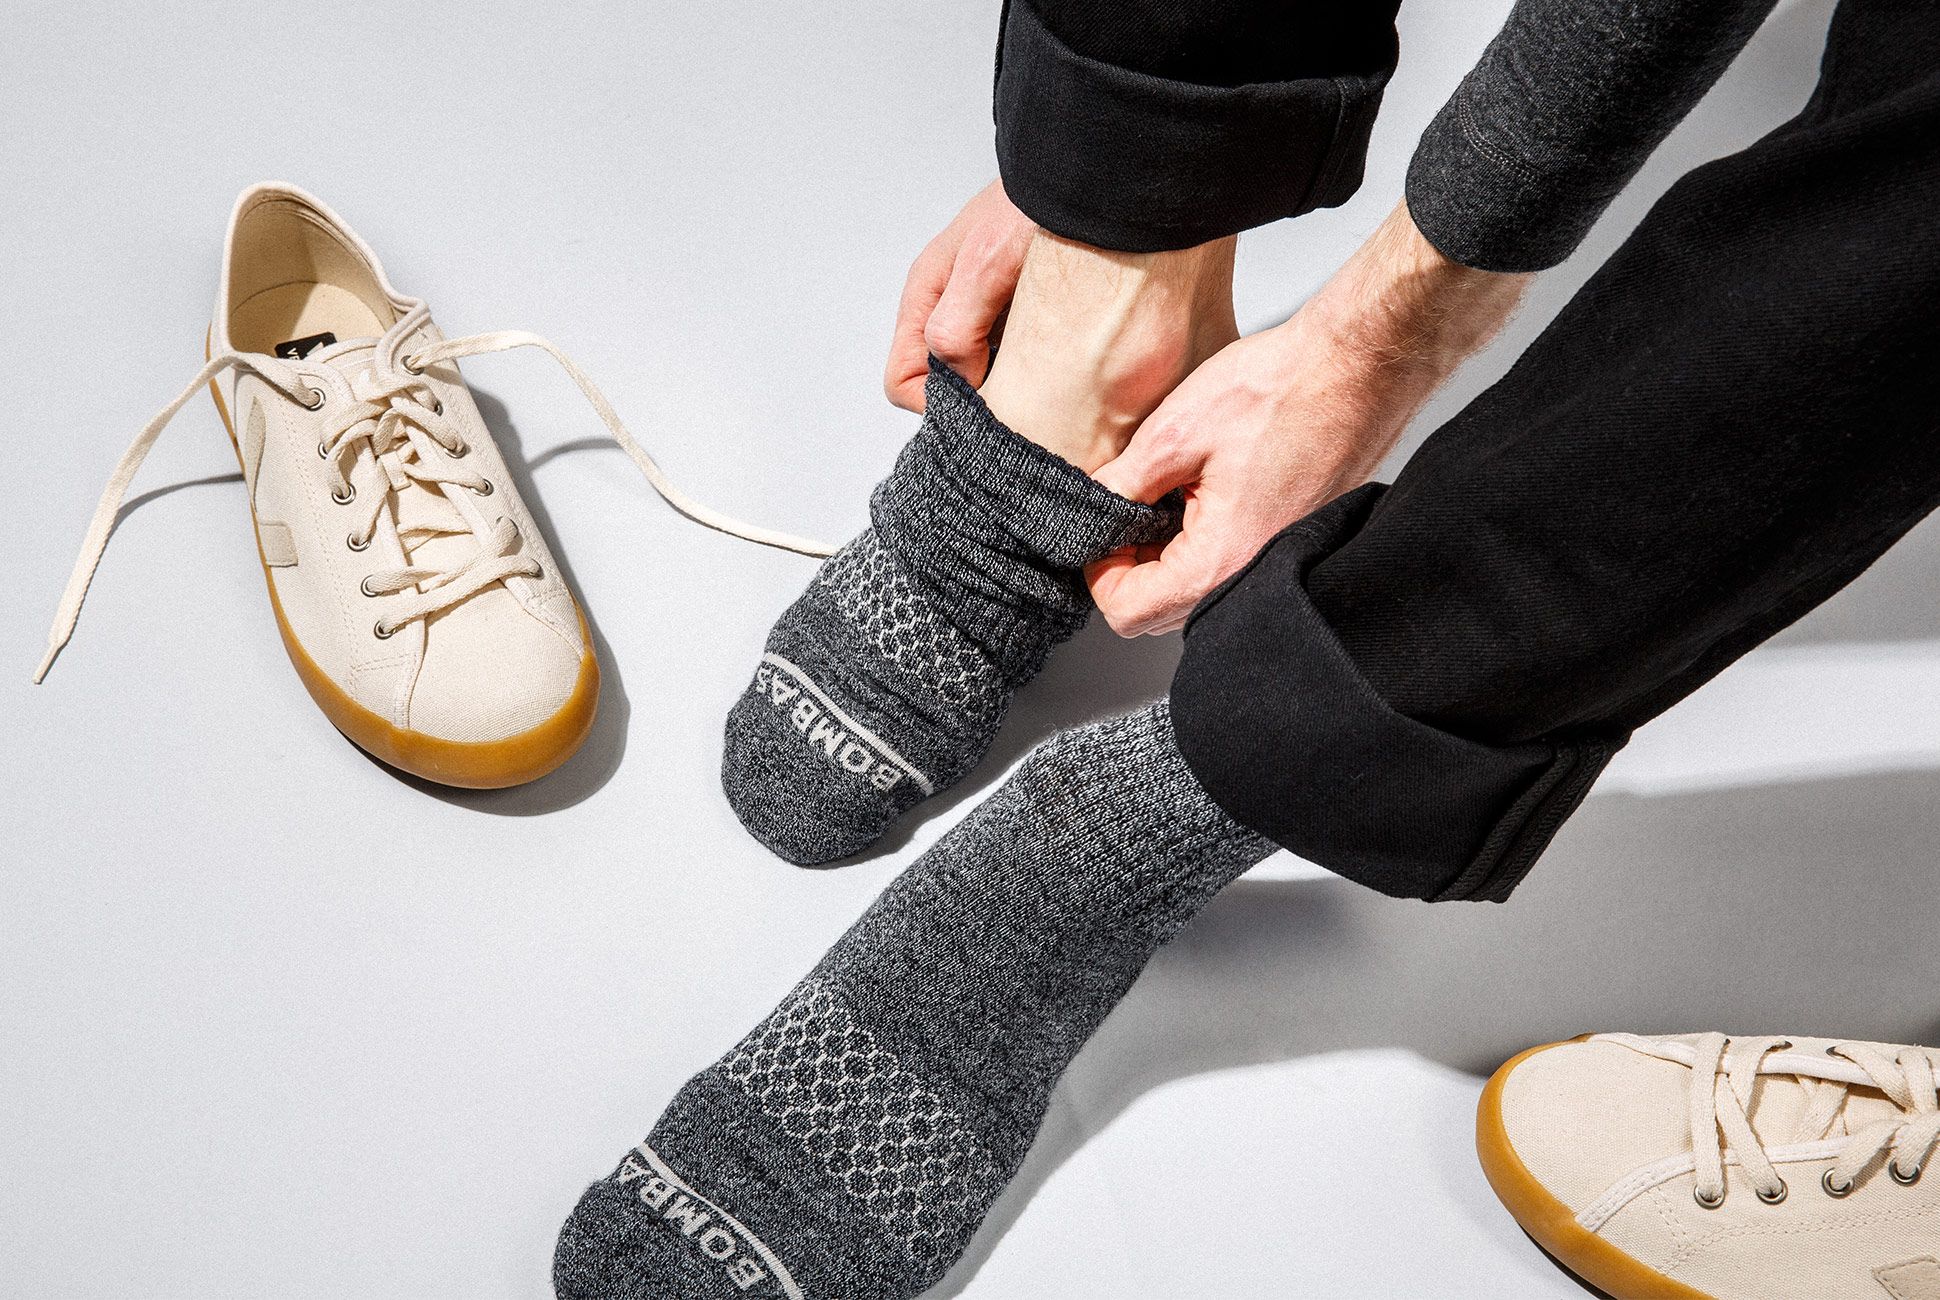 Wearing socks. Socks for man. Мужской зимний носок модель. Сокс. Носки montbell Wickron Travel Ankle Socks.